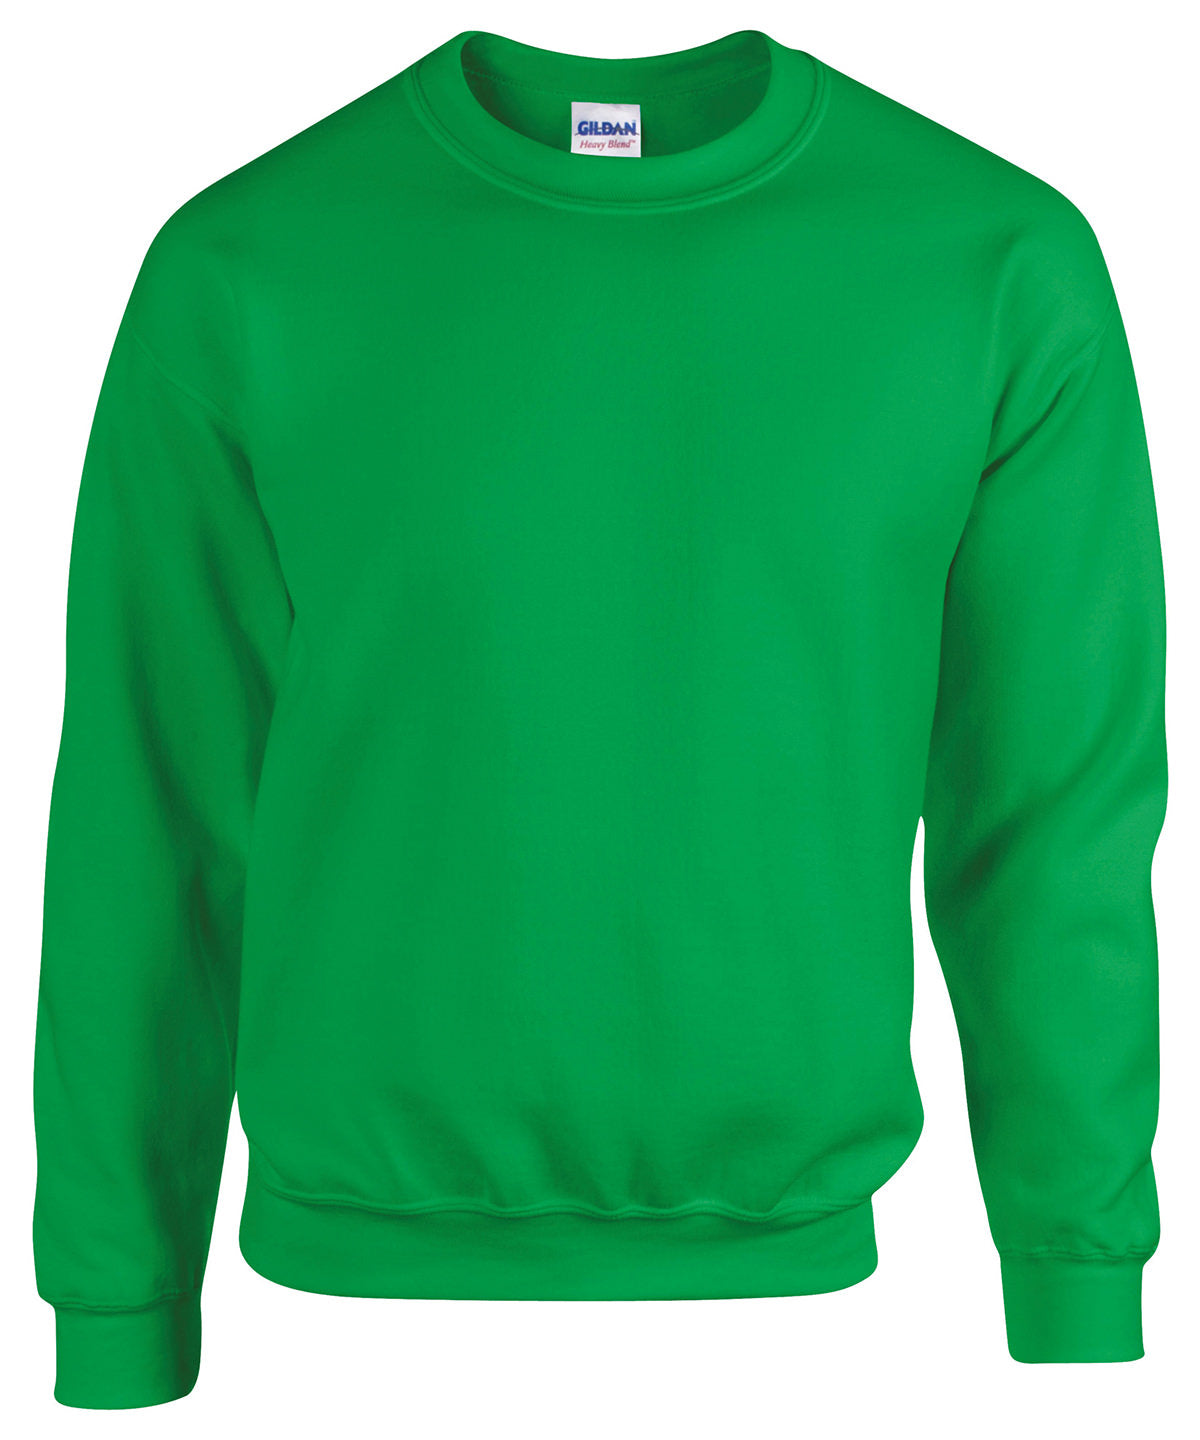 Personalised Sweatshirts - Navy Gildan Heavy Blend™ adult crew neck sweatshirt